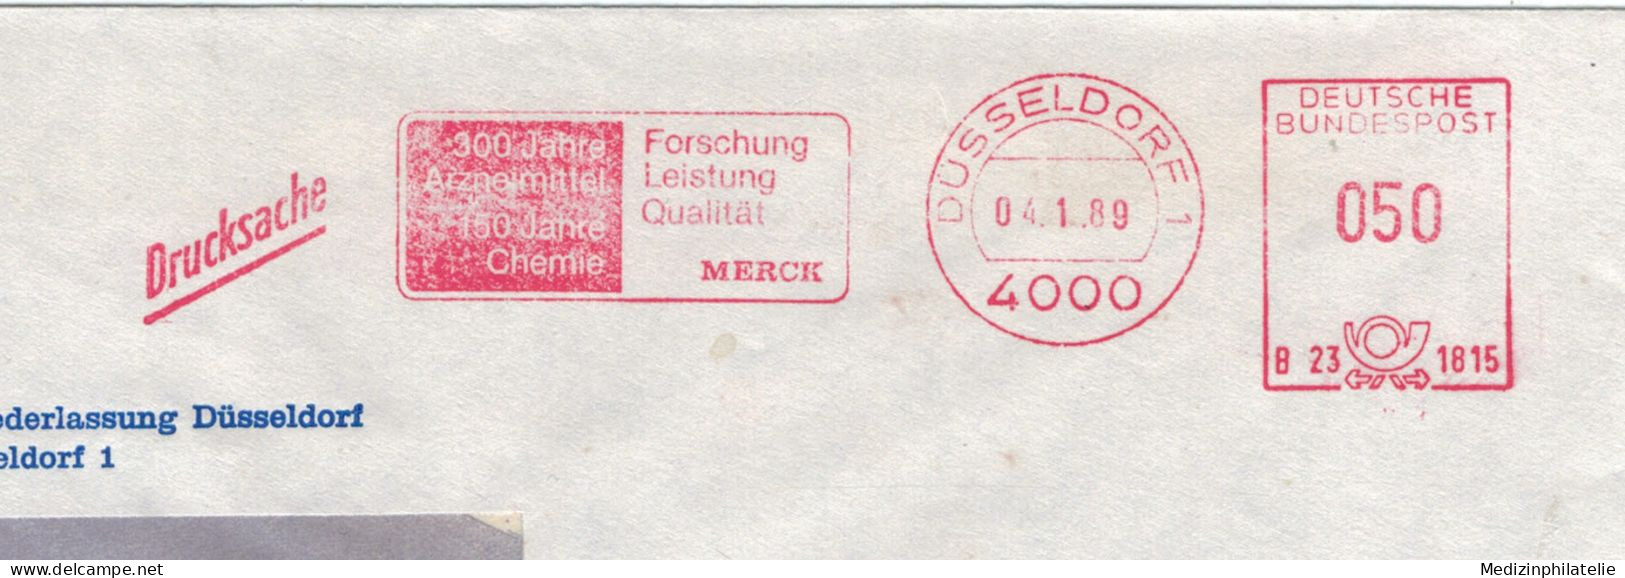 4000 Düsseldorf - Merck Forschung Leistung Qualität - Arzneimittel Chemie 1989 - Pharmacie